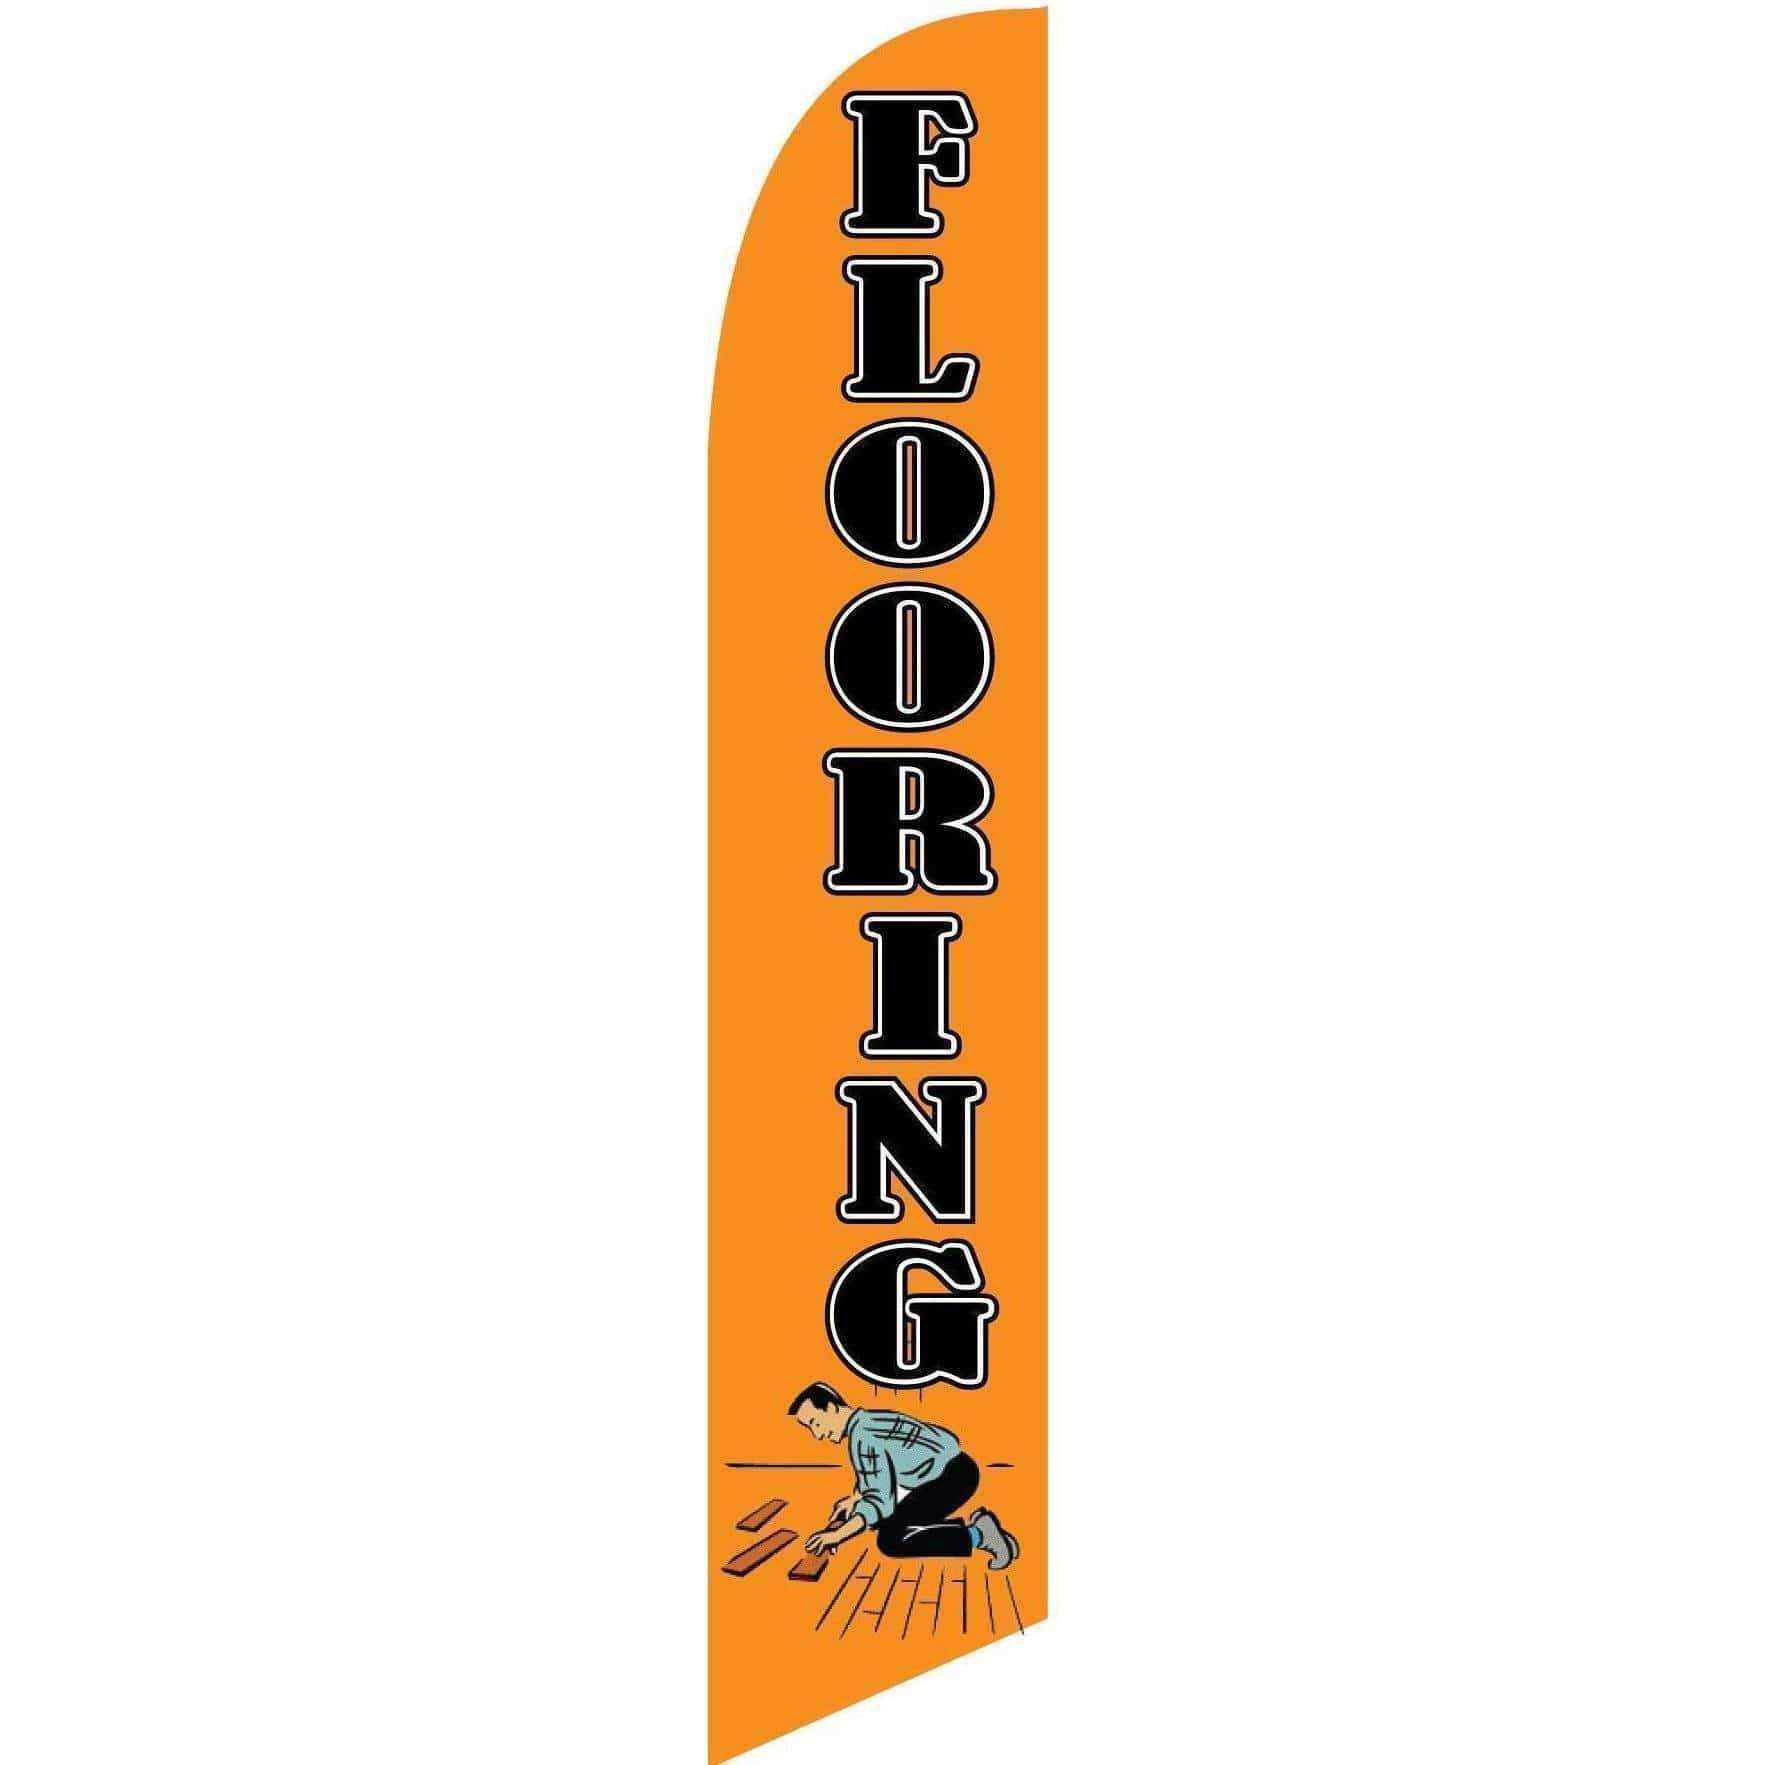 vendor-unknown Advertising Flags Orange Flooring Advertising Banner (banner only)